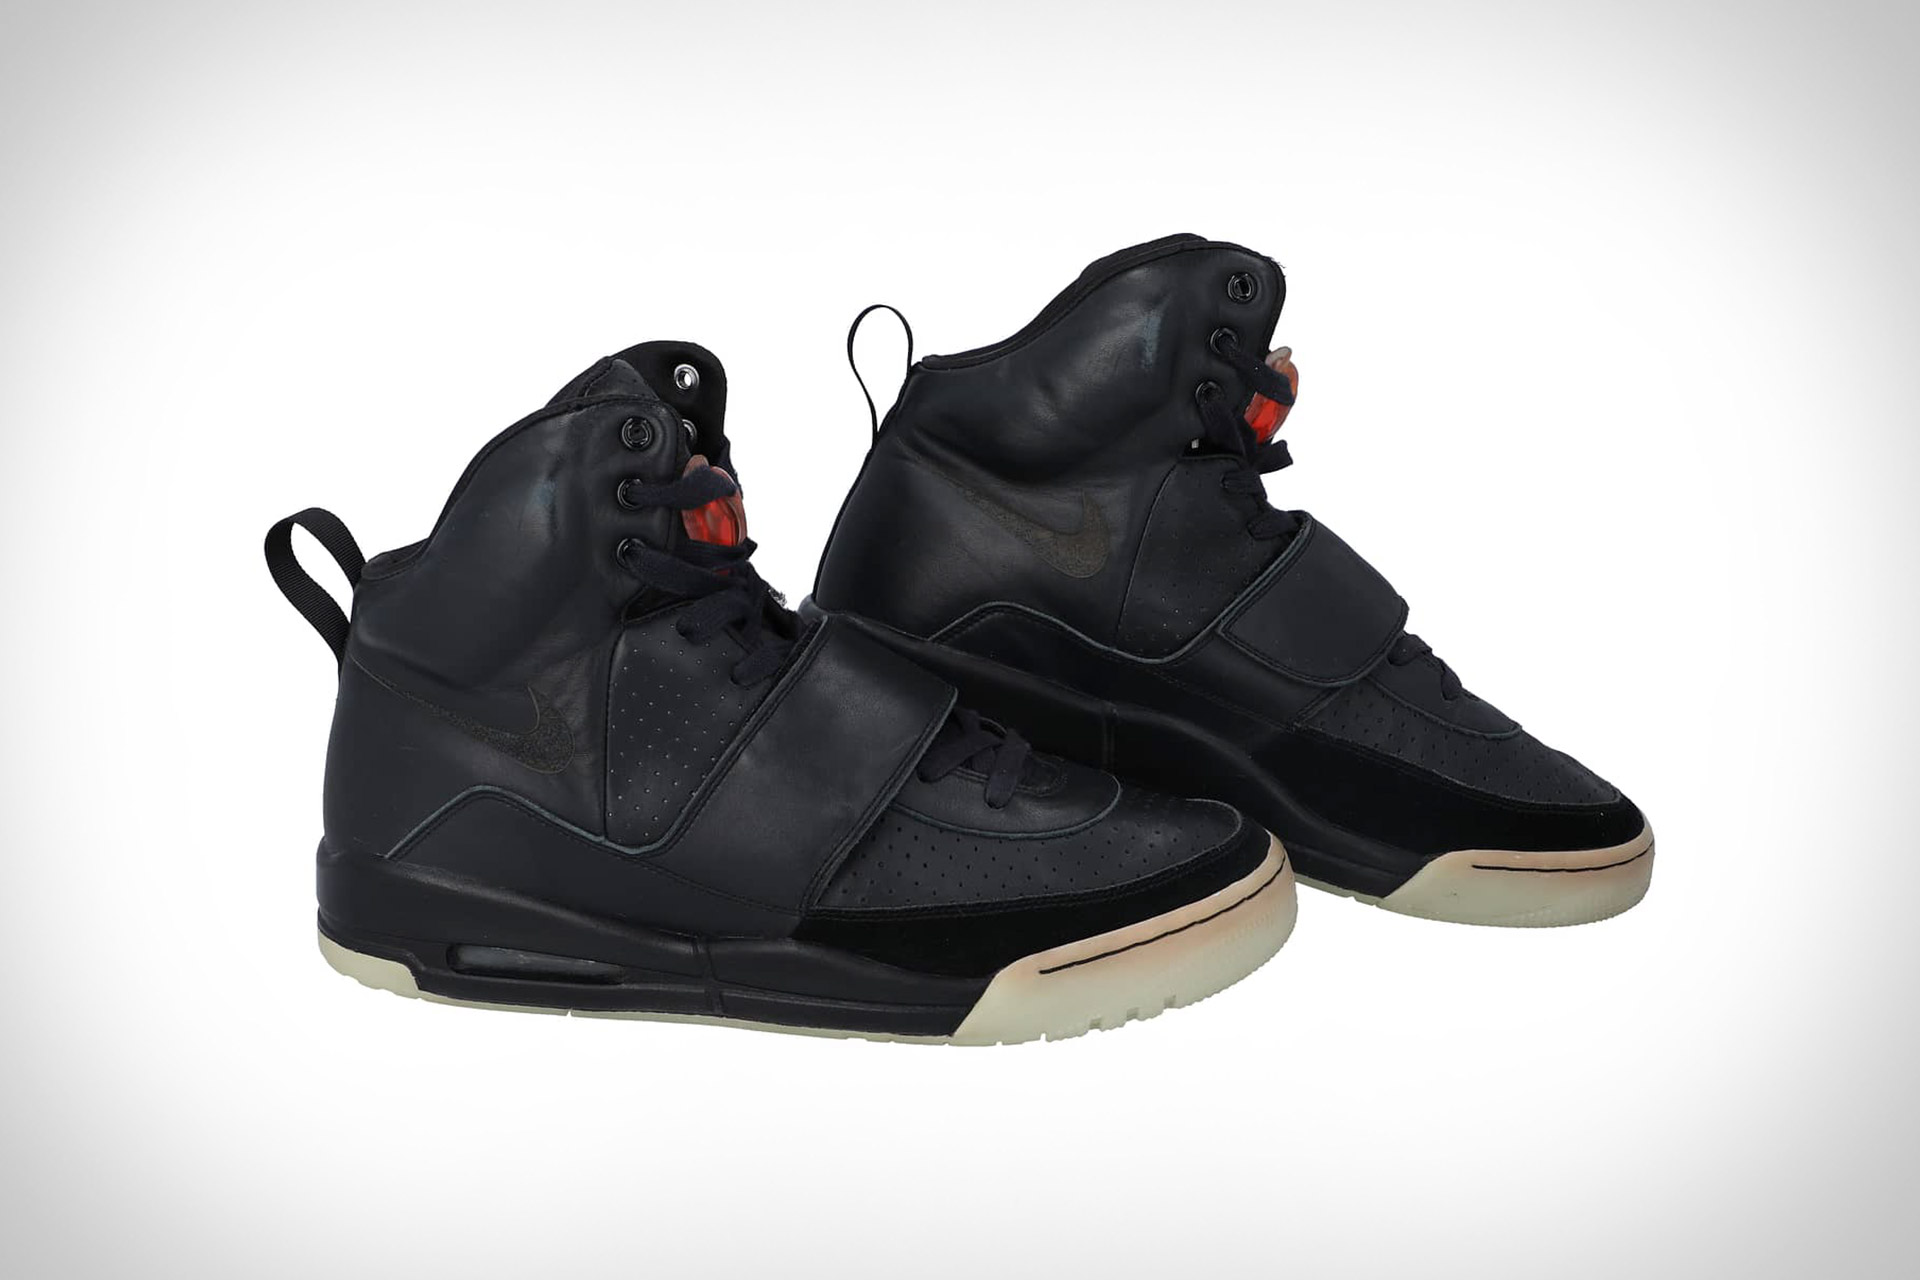 Kanye West Grammy-Worn Nike Air Yeezy Prototype Sneakers #KanyeWest